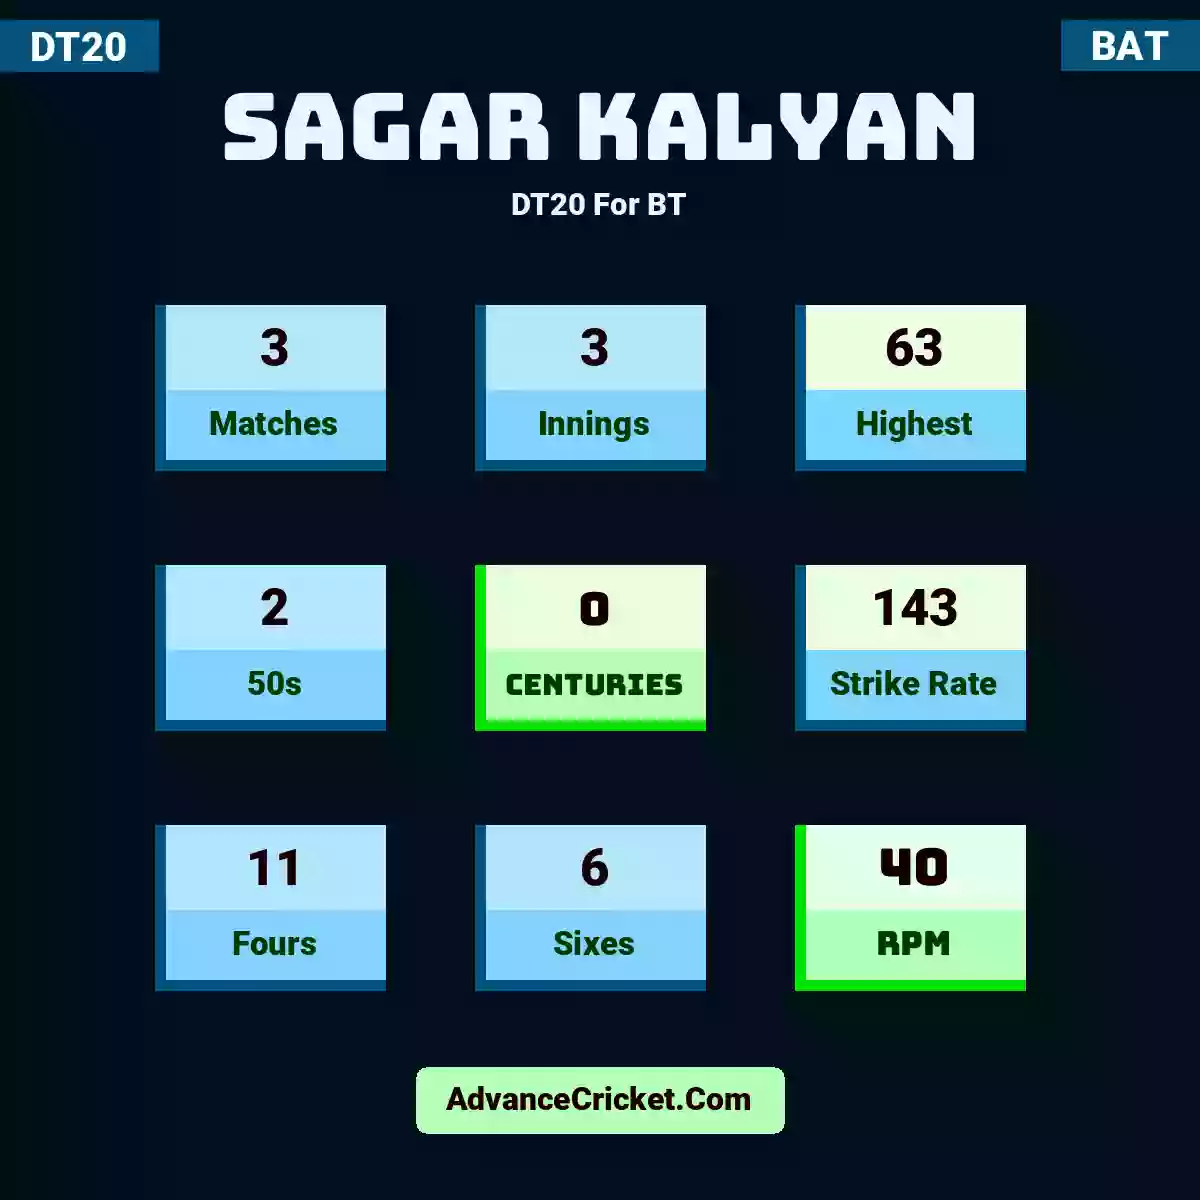 Sagar Kalyan DT20  For BT, Sagar Kalyan played 3 matches, scored 63 runs as highest, 2 half-centuries, and 0 centuries, with a strike rate of 143. S.Kalyan hit 11 fours and 6 sixes, with an RPM of 40.